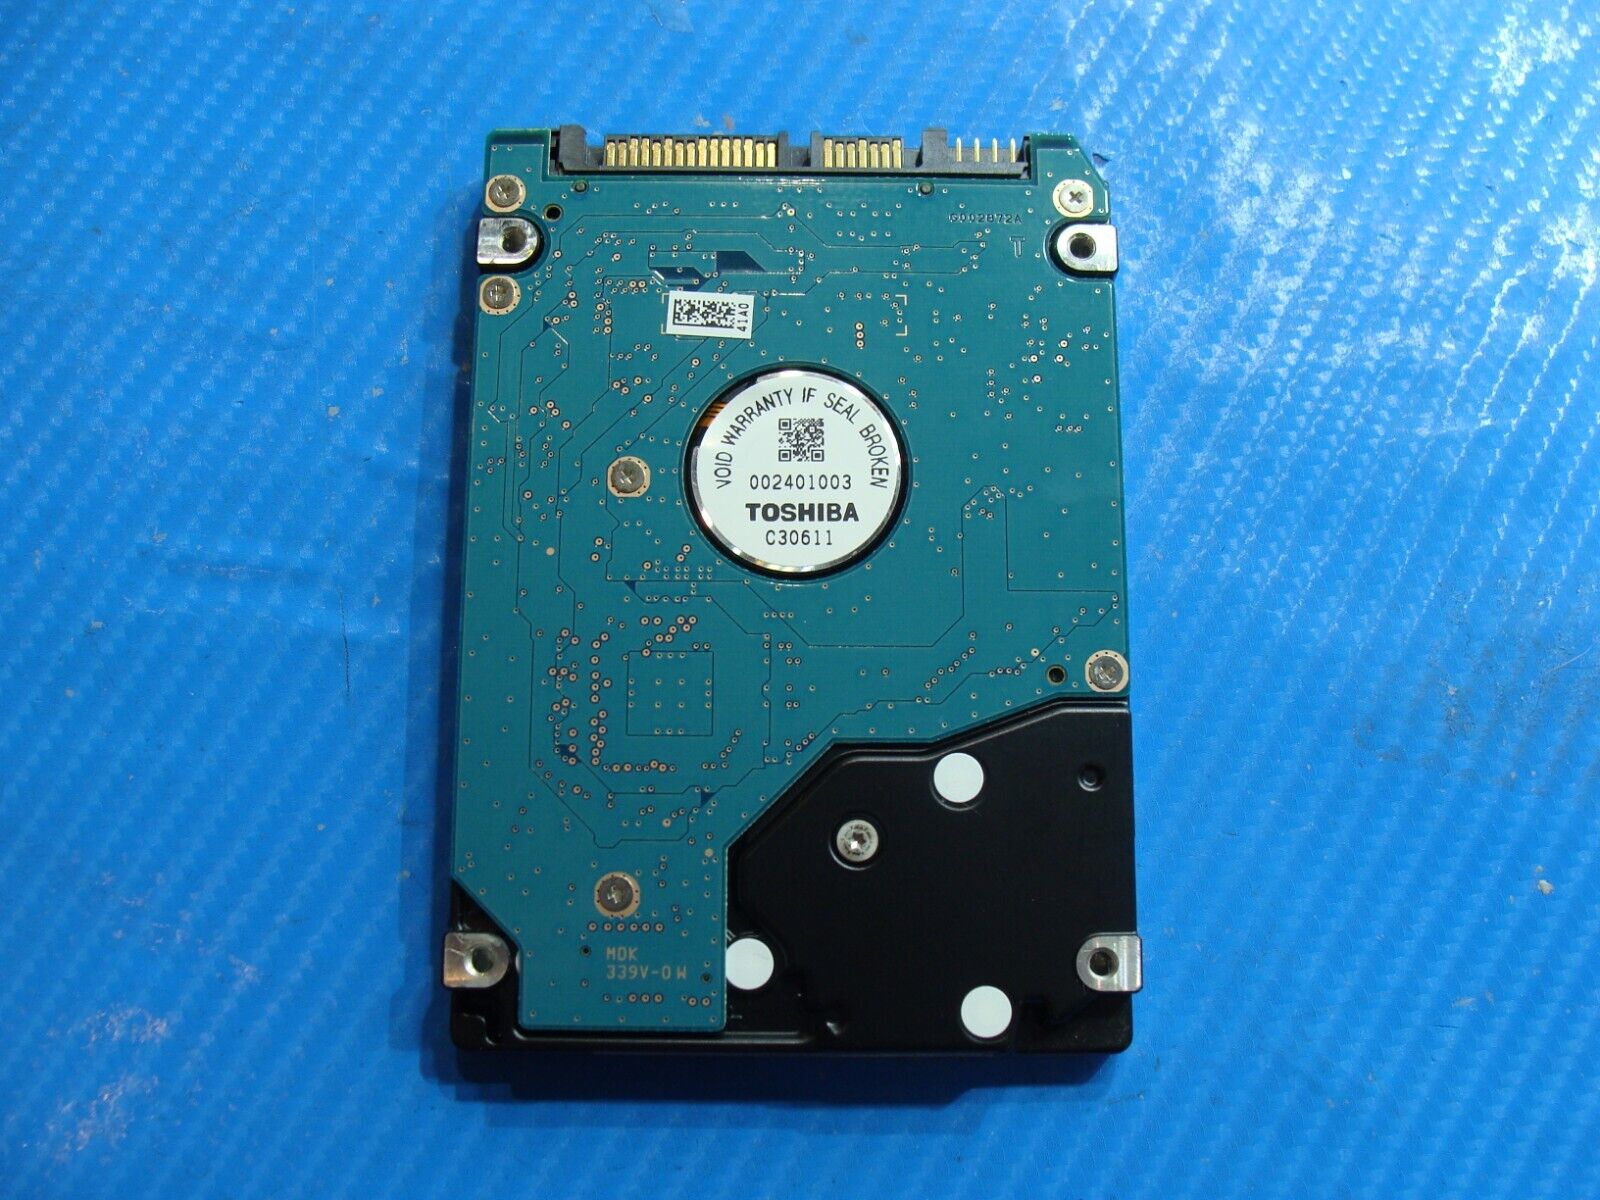 Lenovo T530 Toshiba 500GB 7200RPM SATA 2.5'' HDD Hard Drive MK5061GSY 45N7053